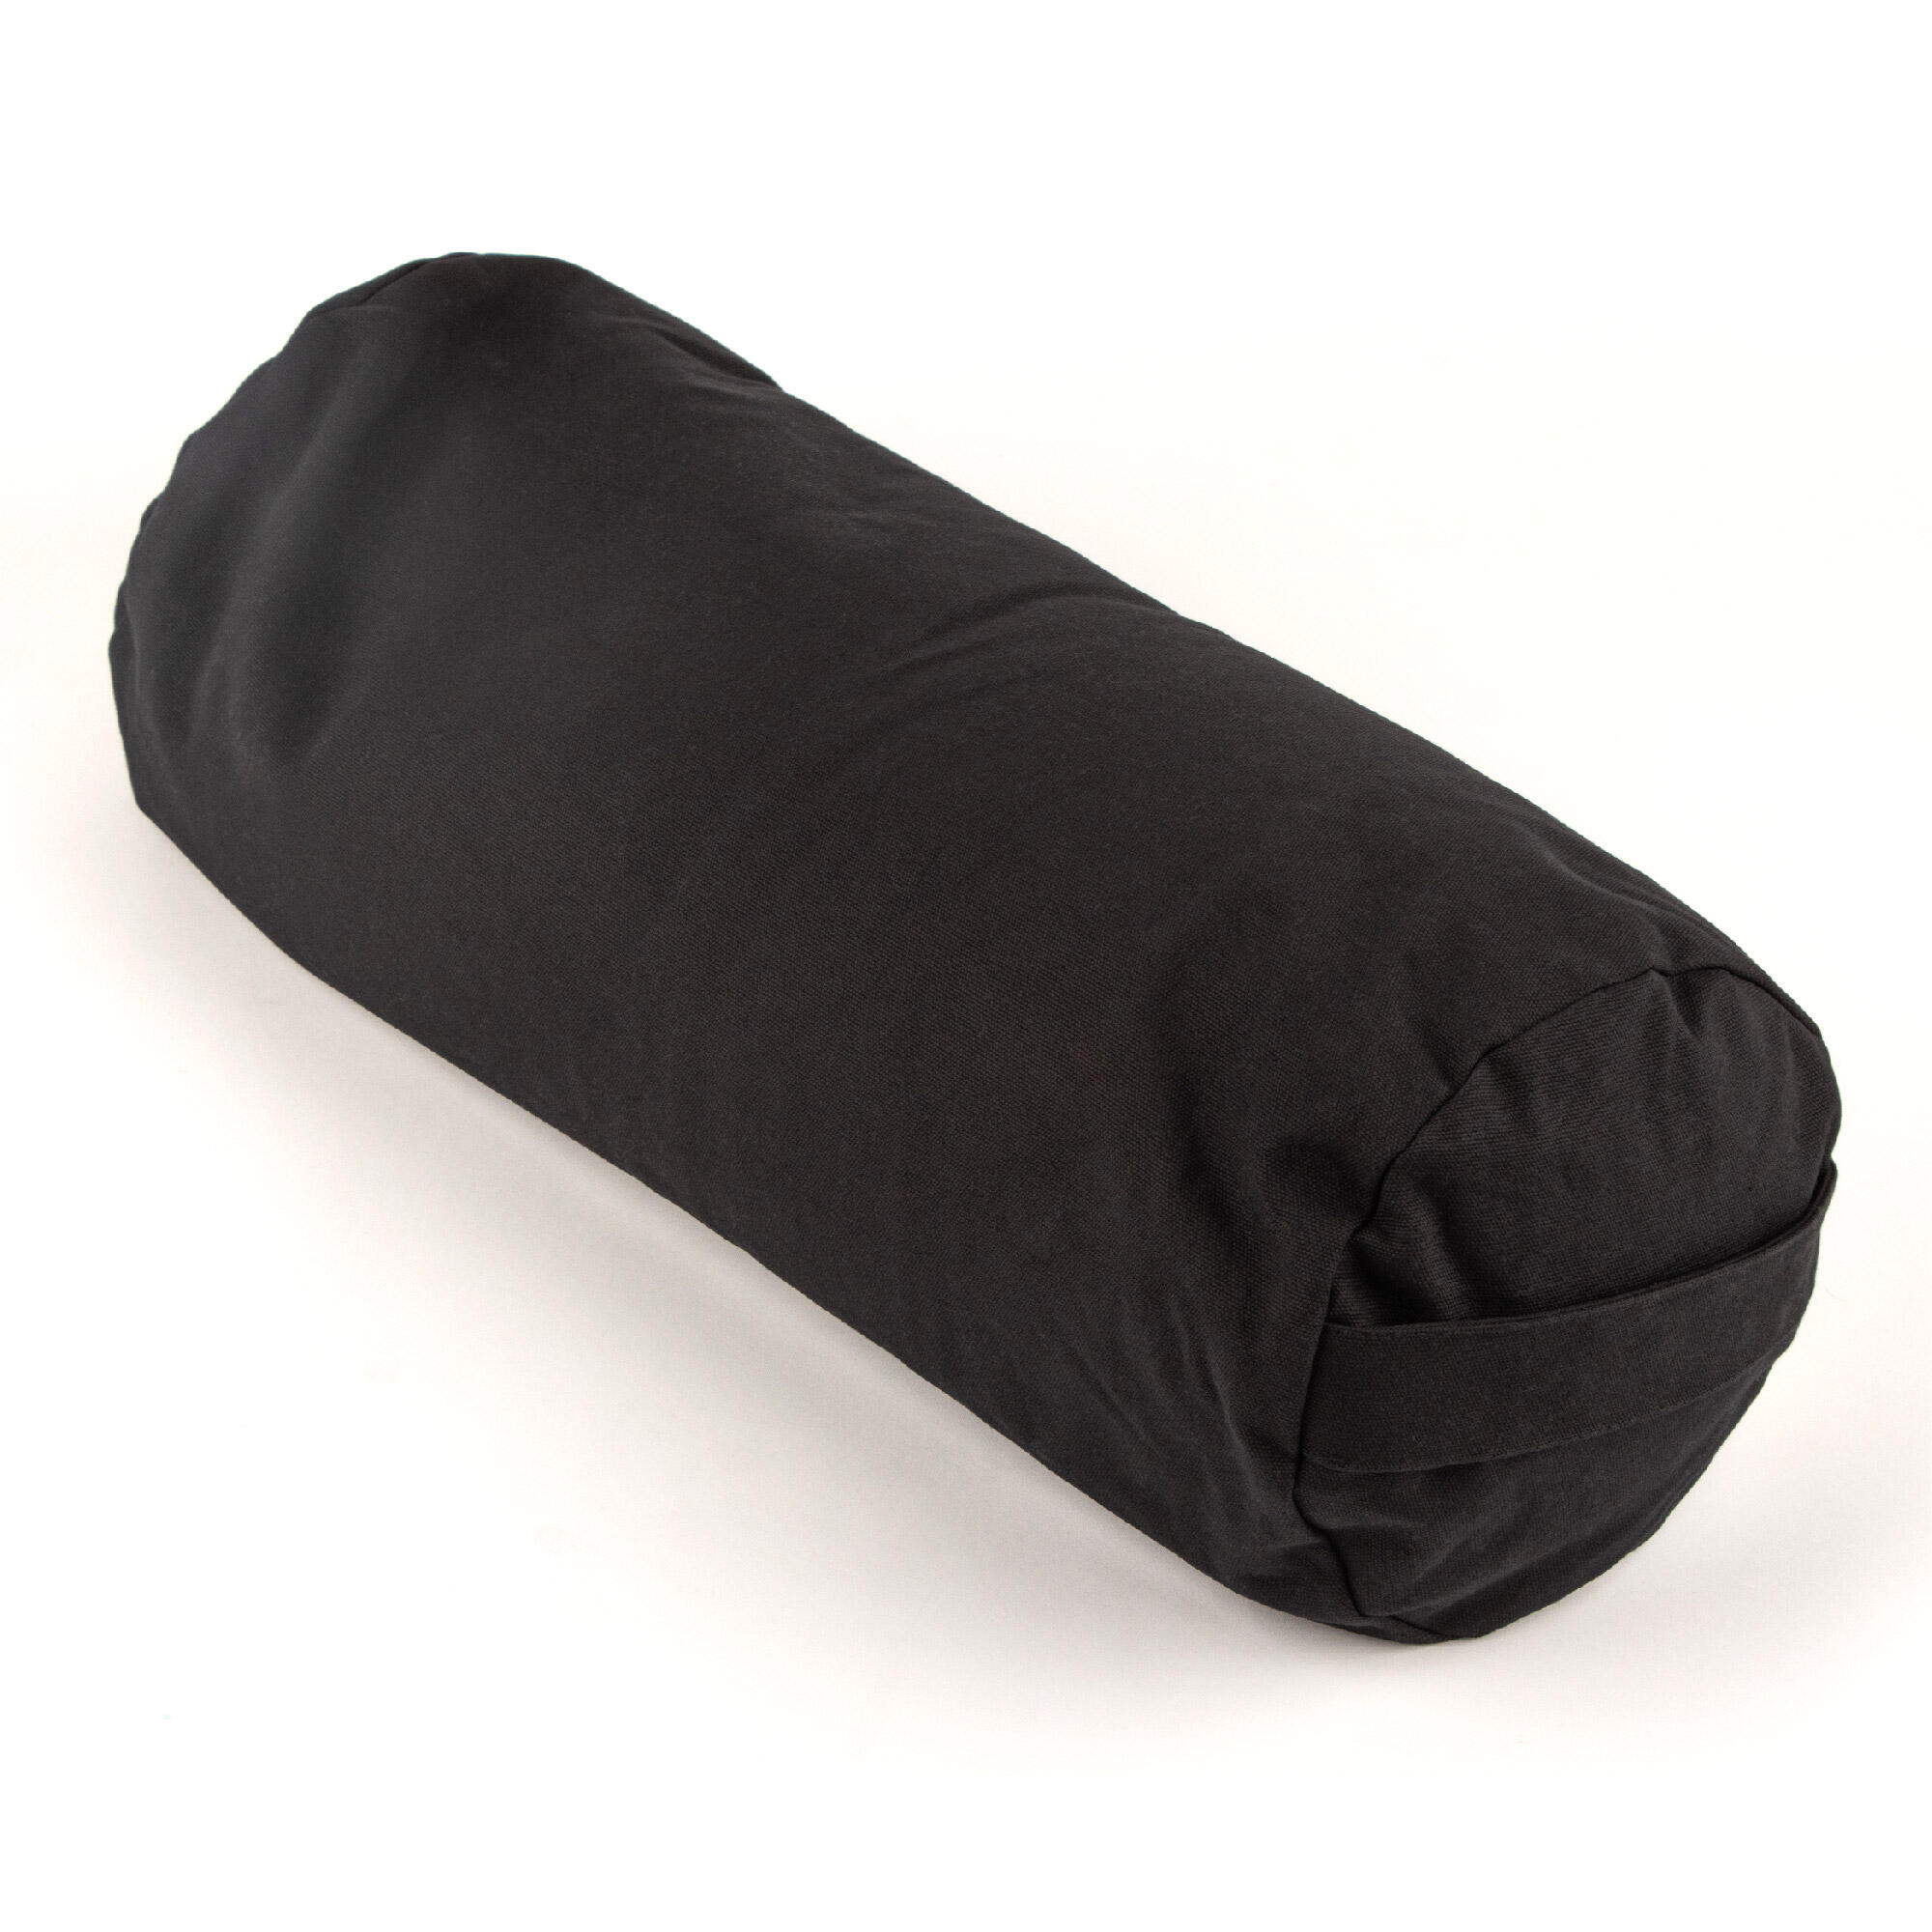 MYGA Myga Buckwheat Support Bolster Pillow - Black